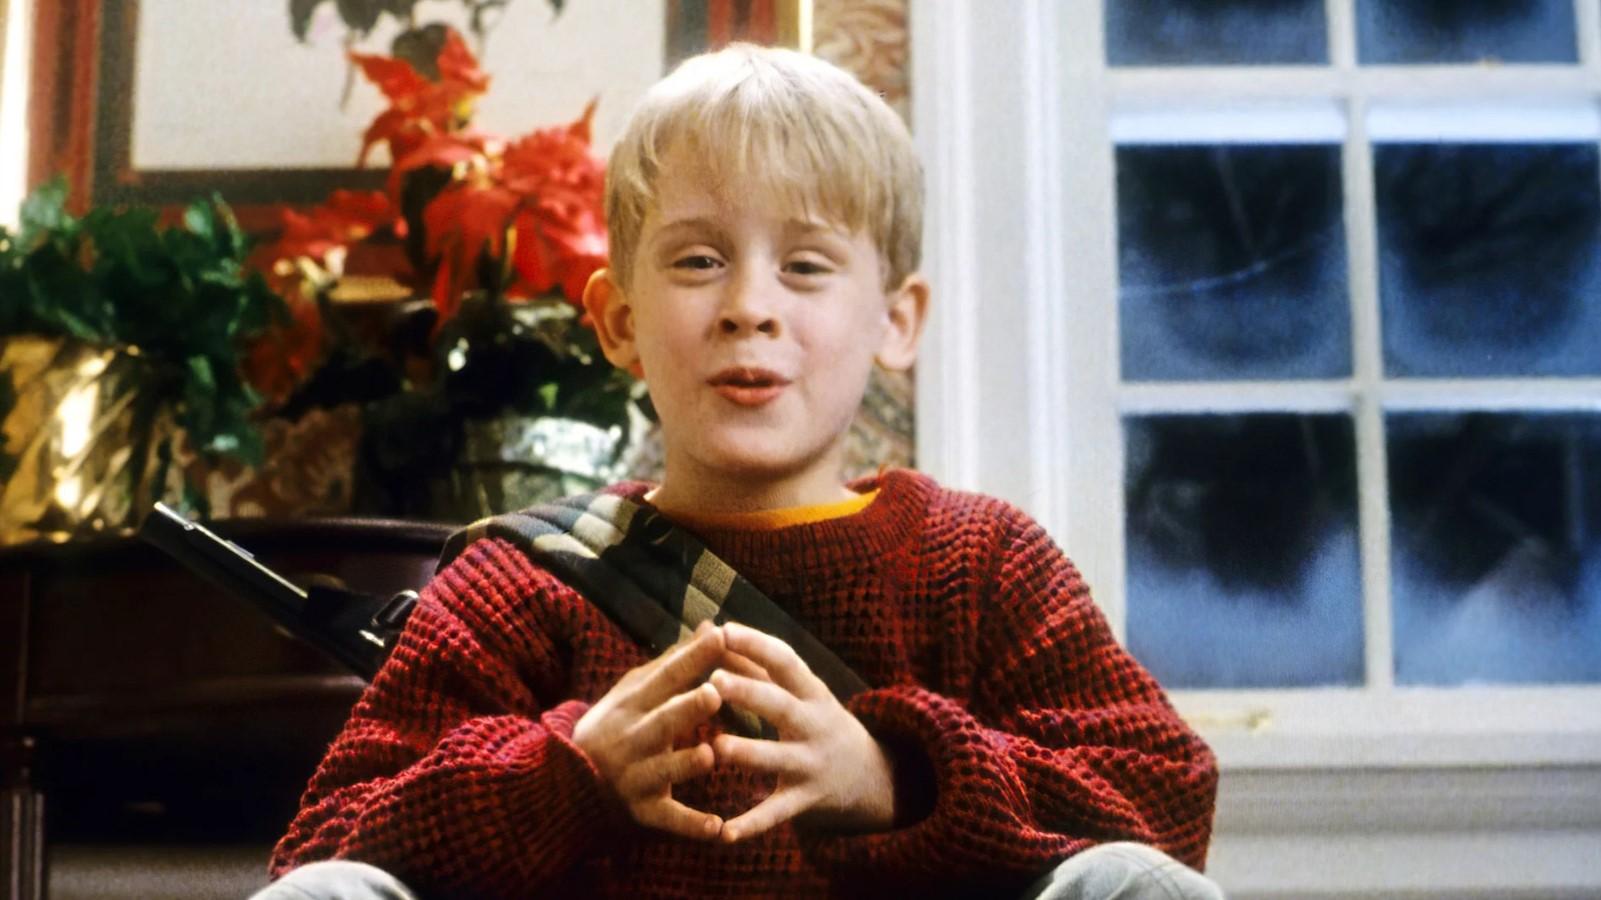 Macaulay Culkin as Kevin in Home Alone